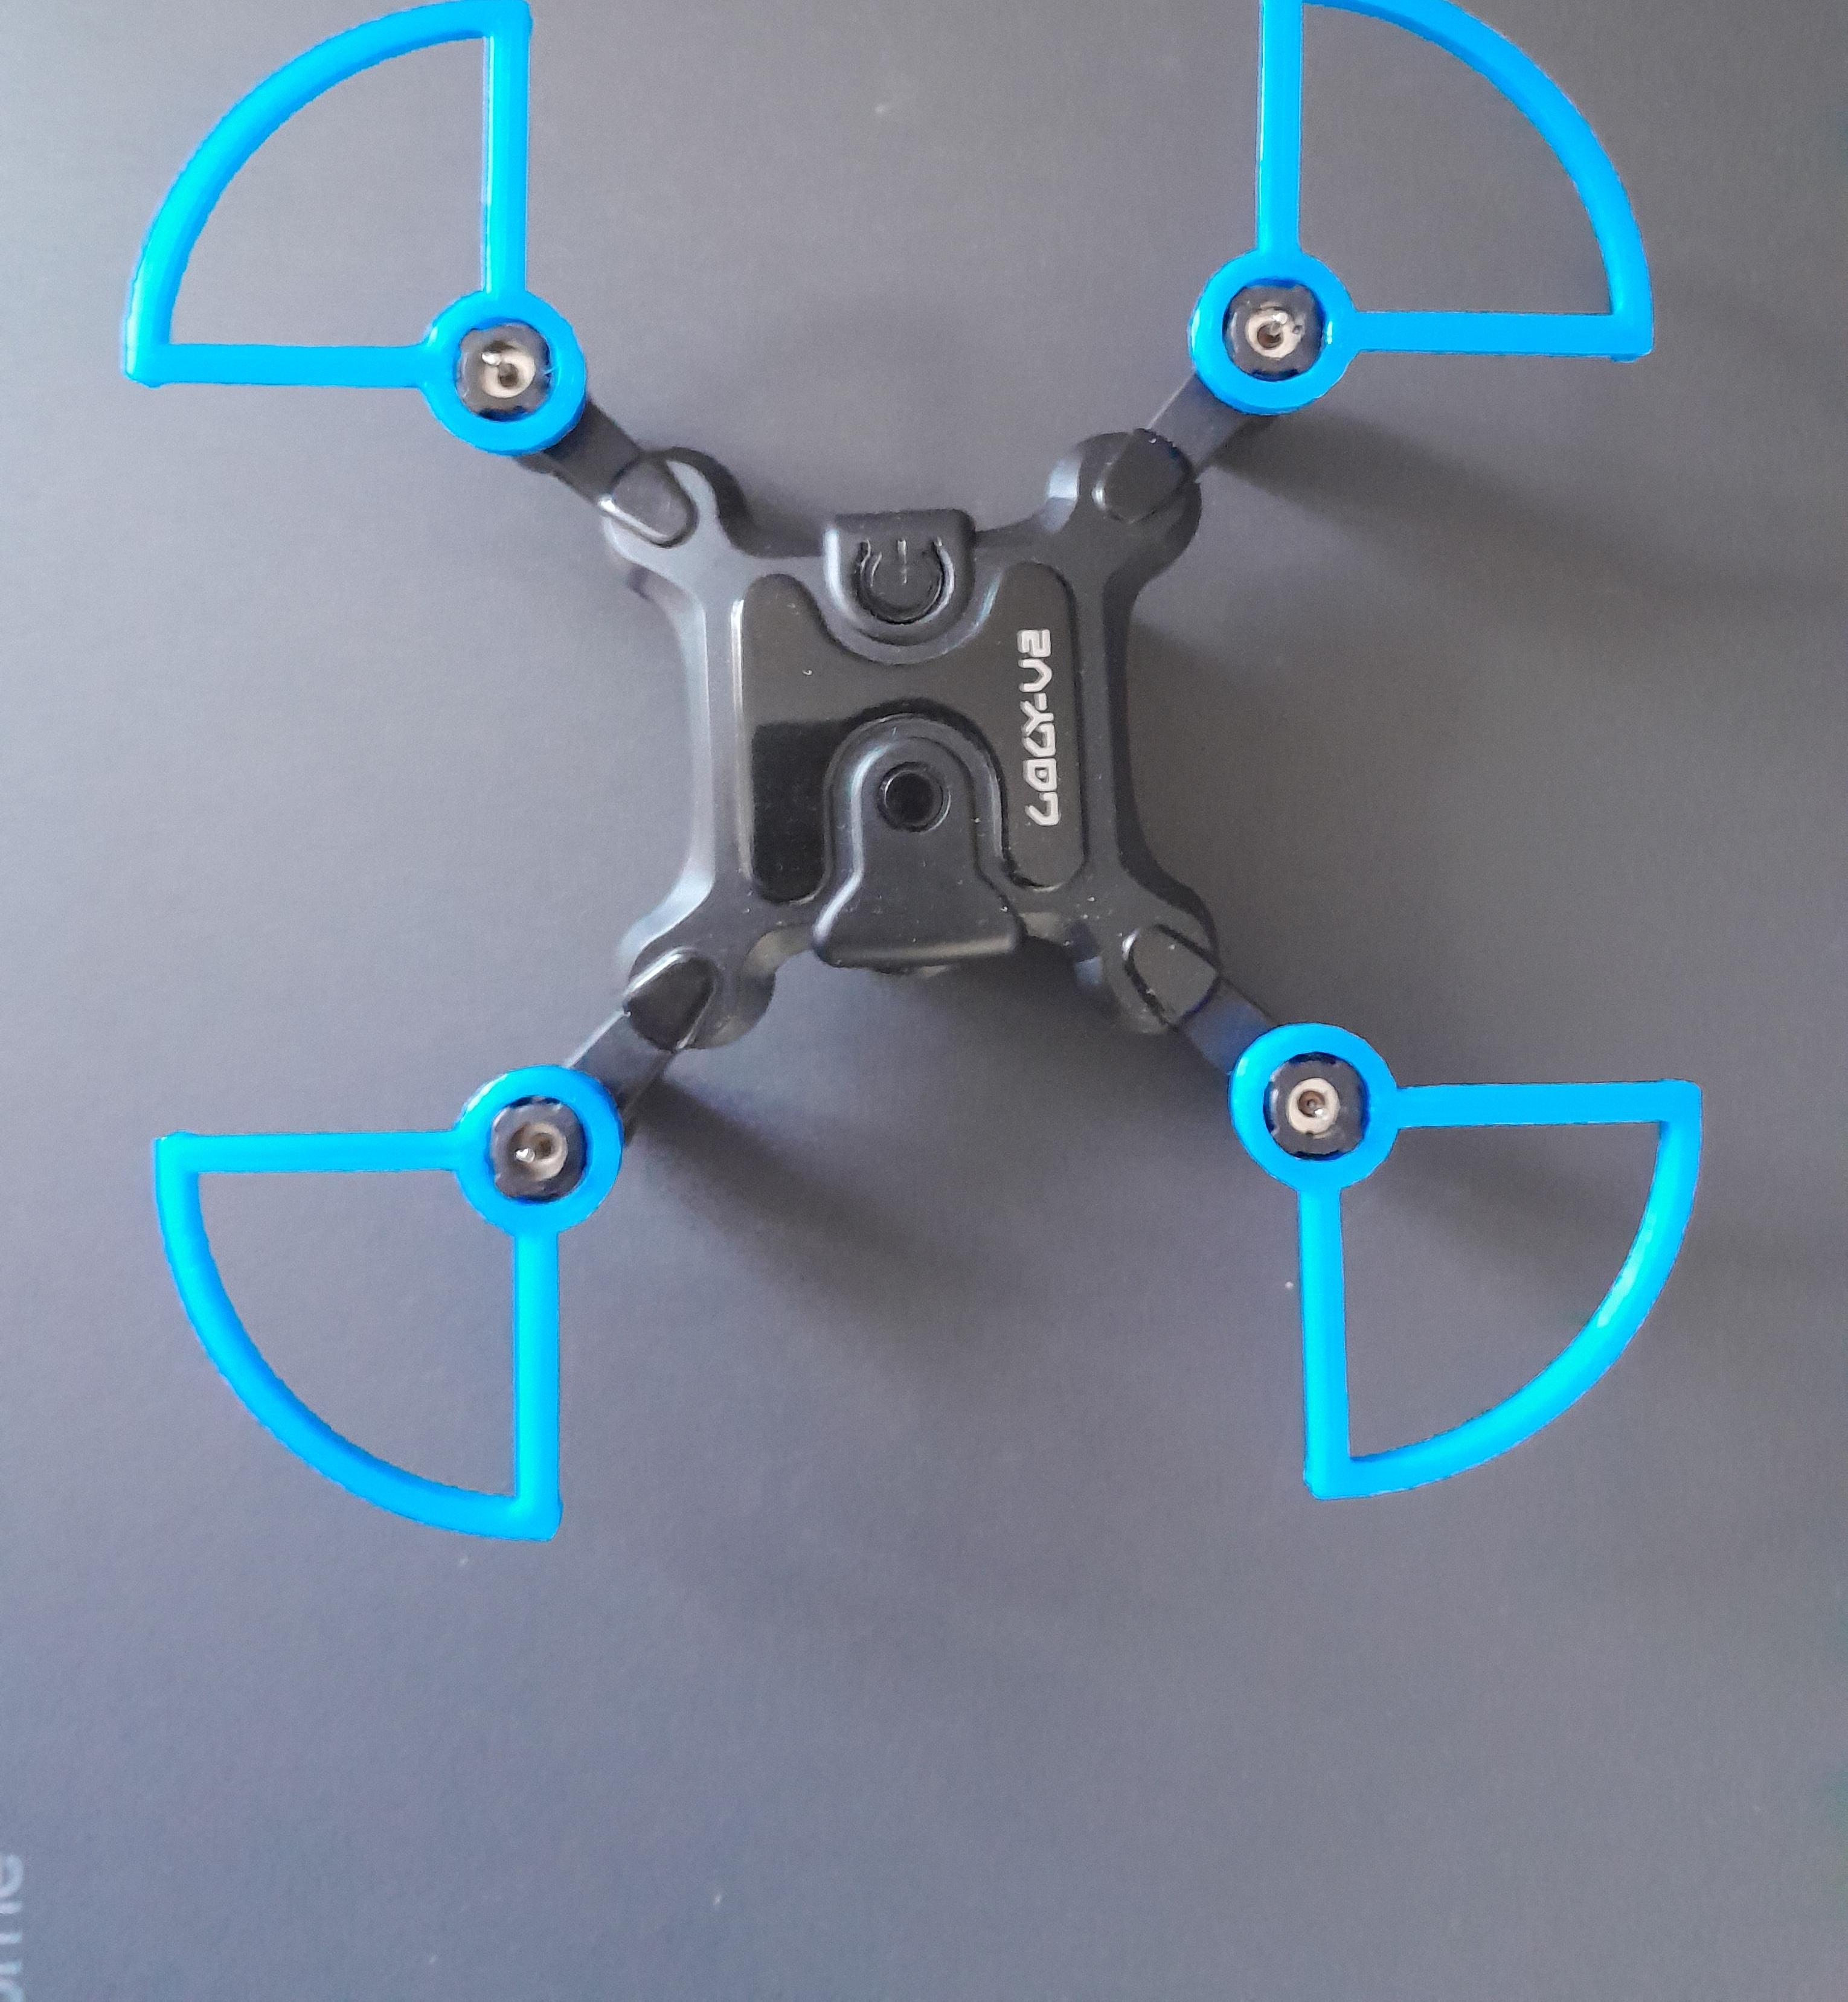 3D Printed Drone Gaurds